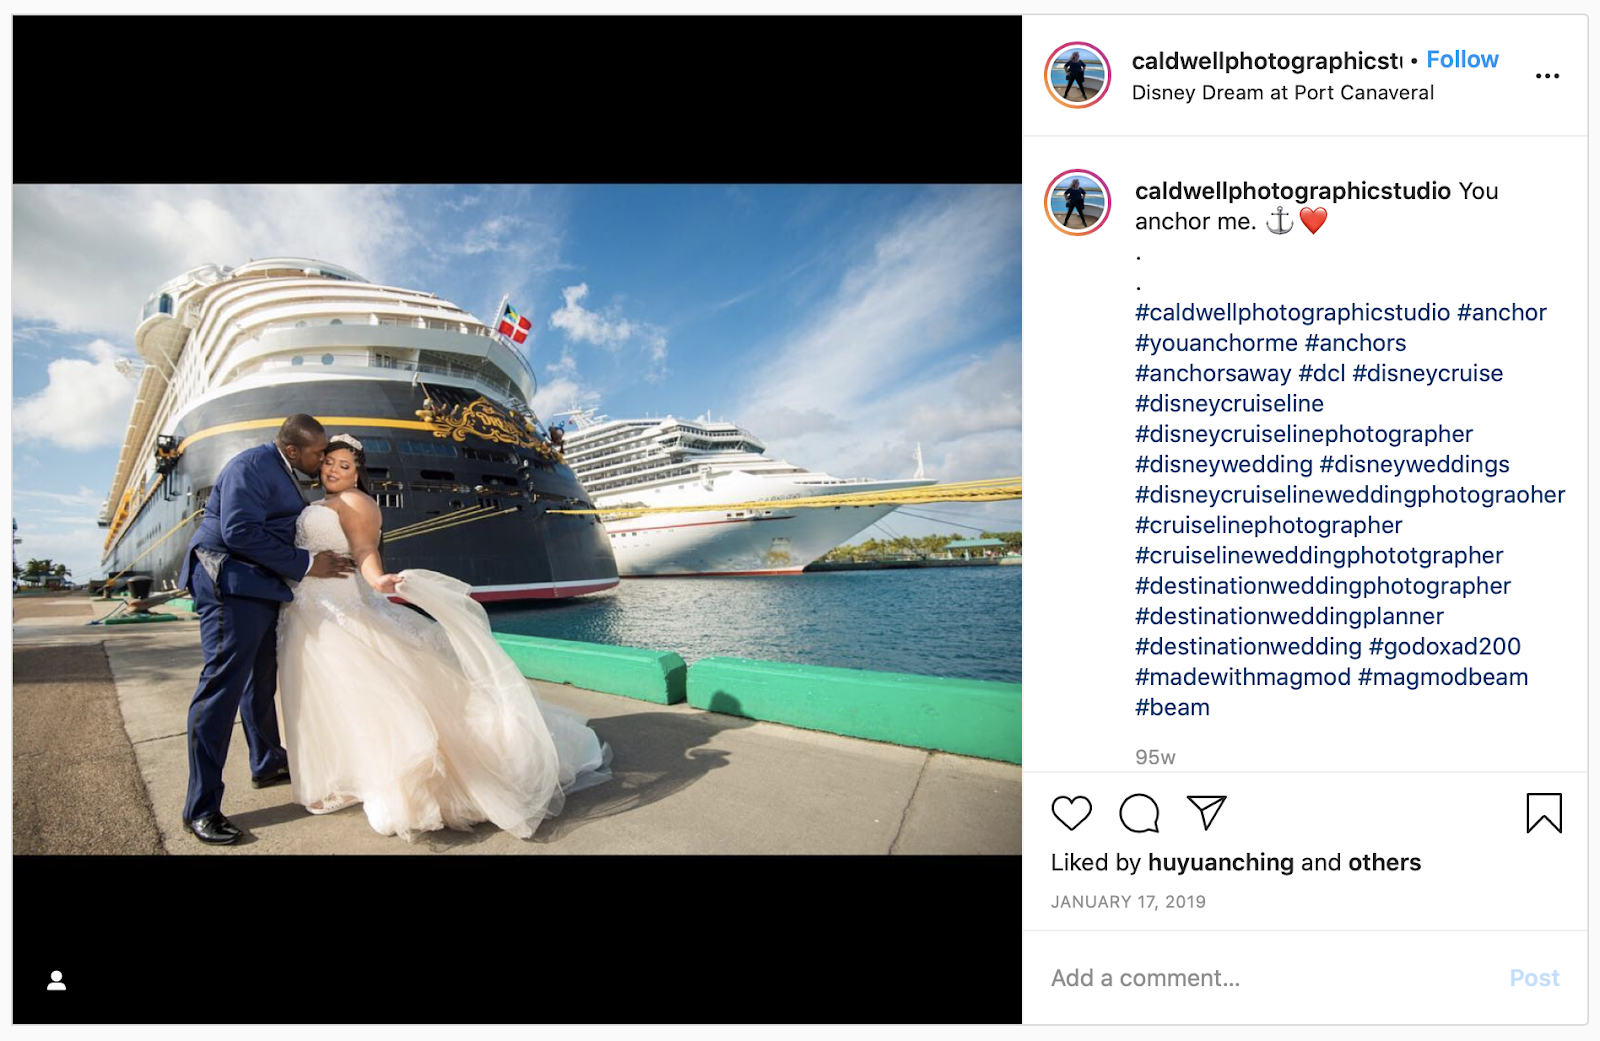 beach/sea wedding hashtag option